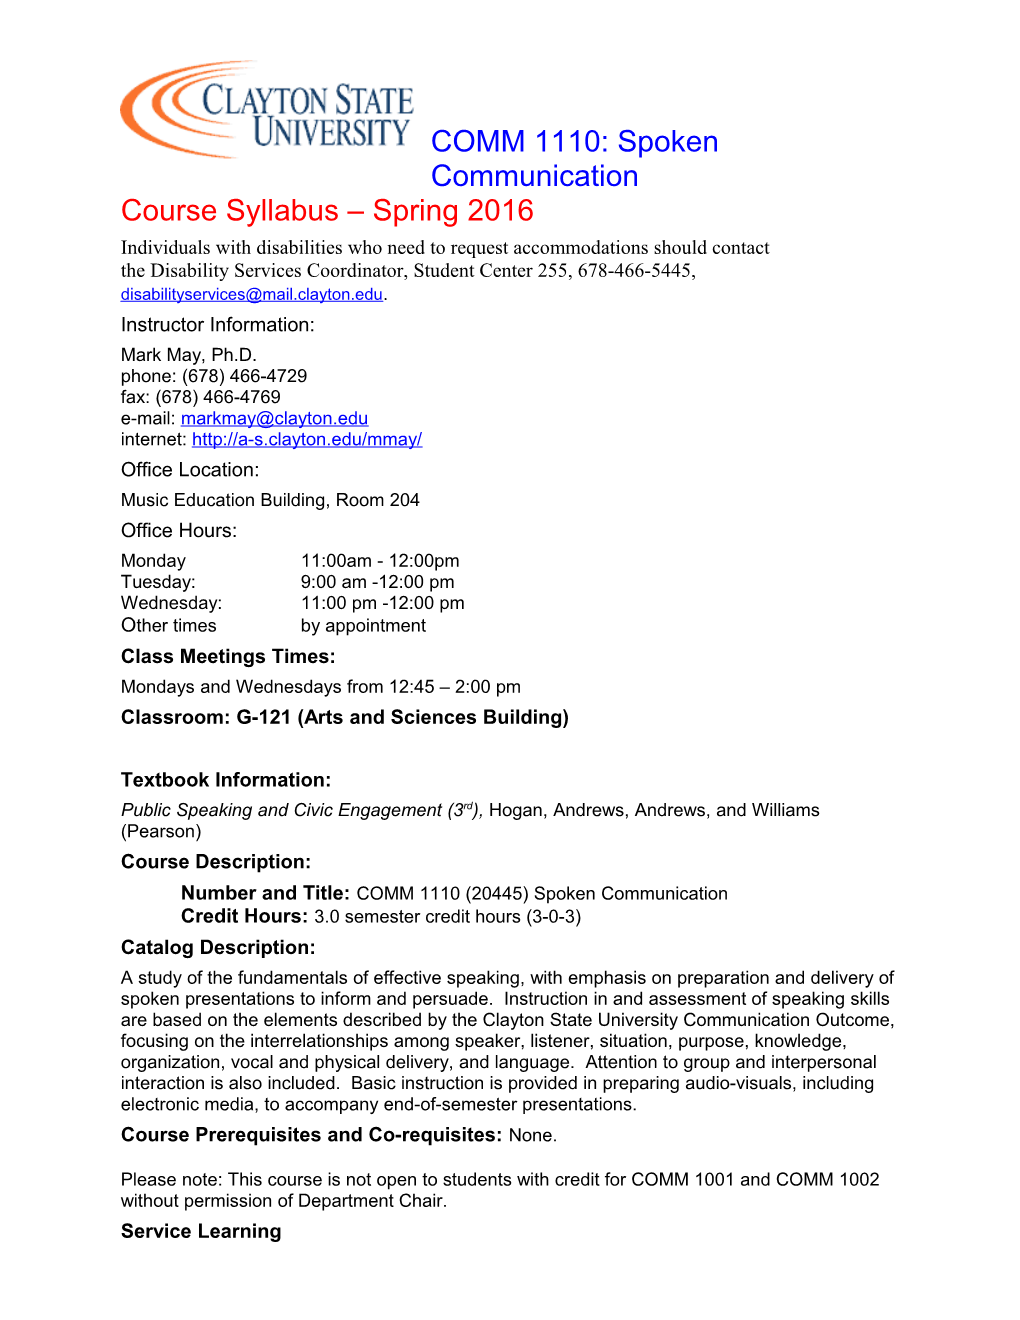 COMM1110: Spoken Communication Course Syllabus Spring2016